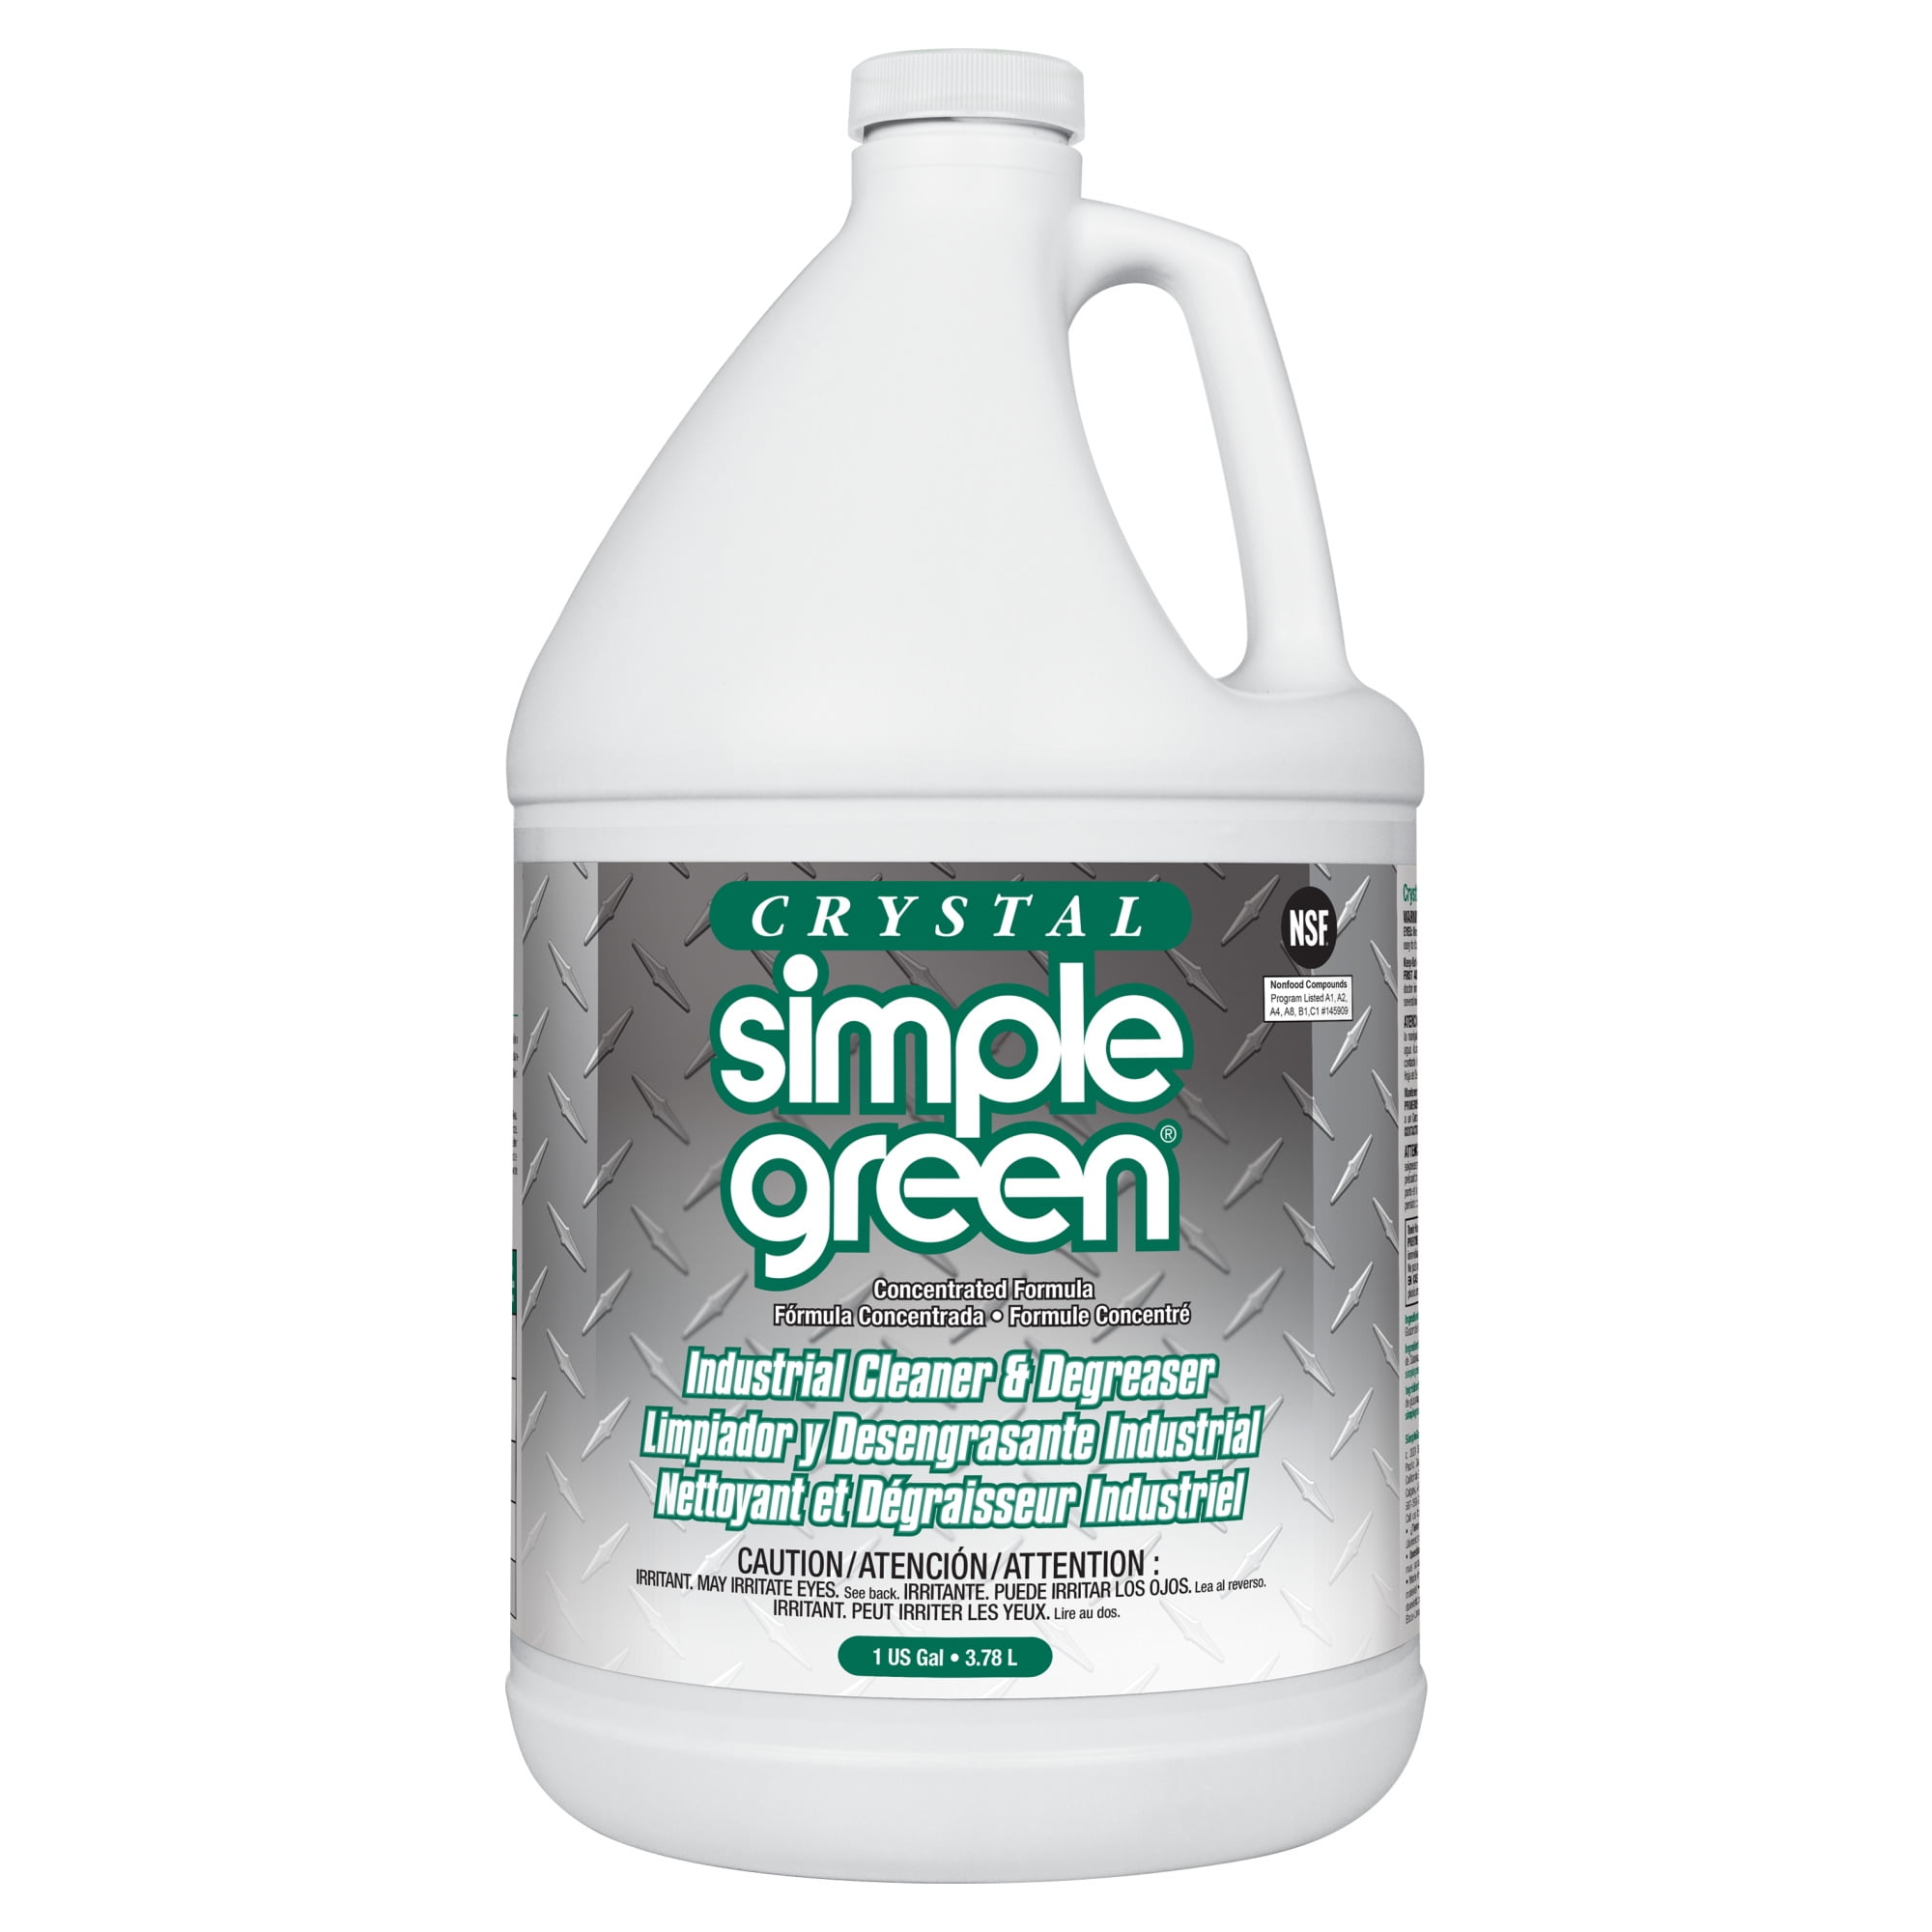 Greenstuff - Industrial Strength Cleaner & Degreaser 1 Gallon